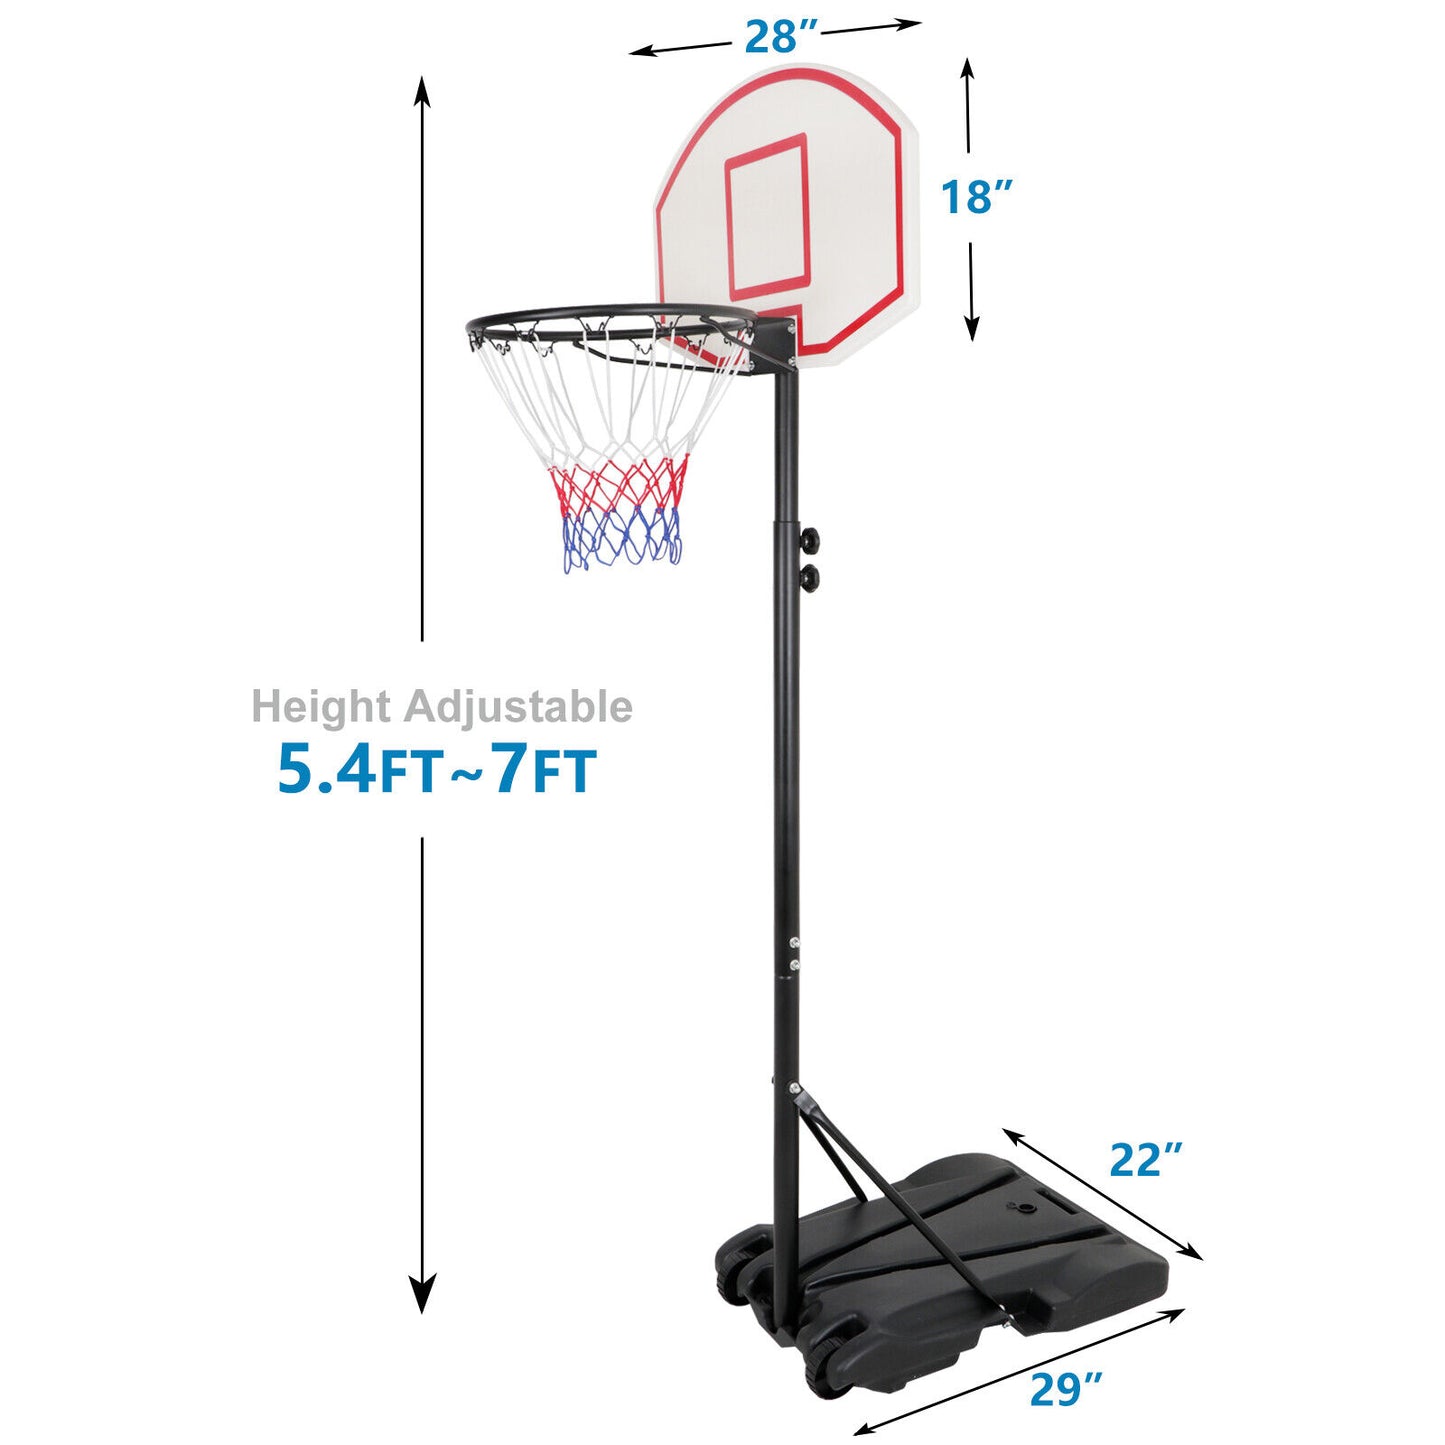 28'' x 18'' Backboard Adjustable Height Basketball Hoop Outdoor Stand